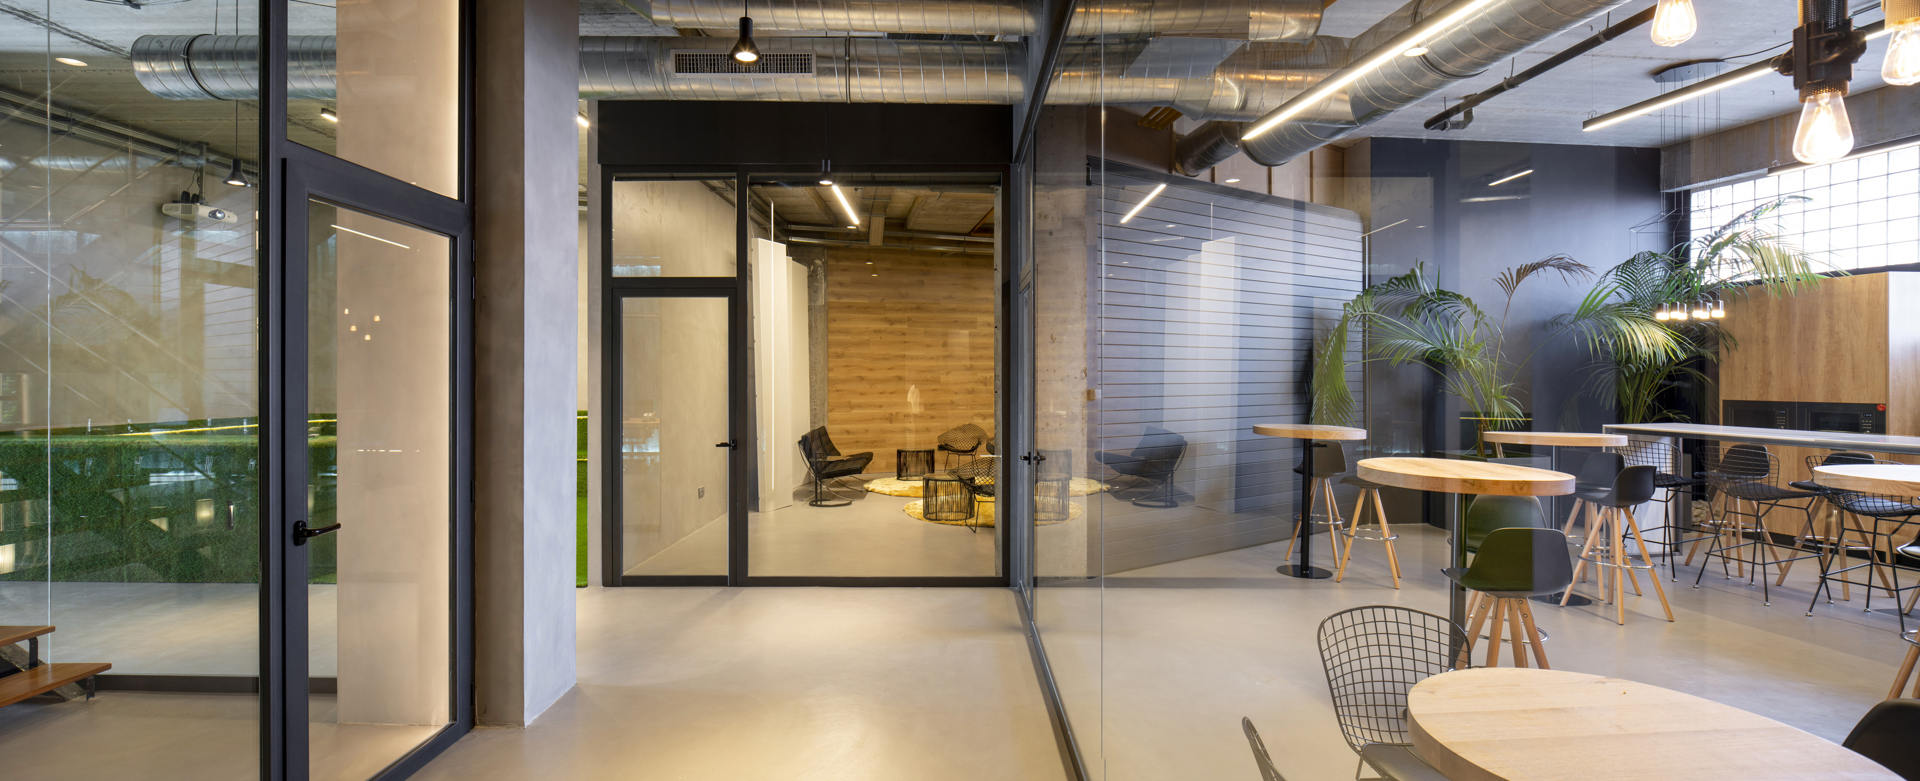 oficina con piso de cemento decorativo 